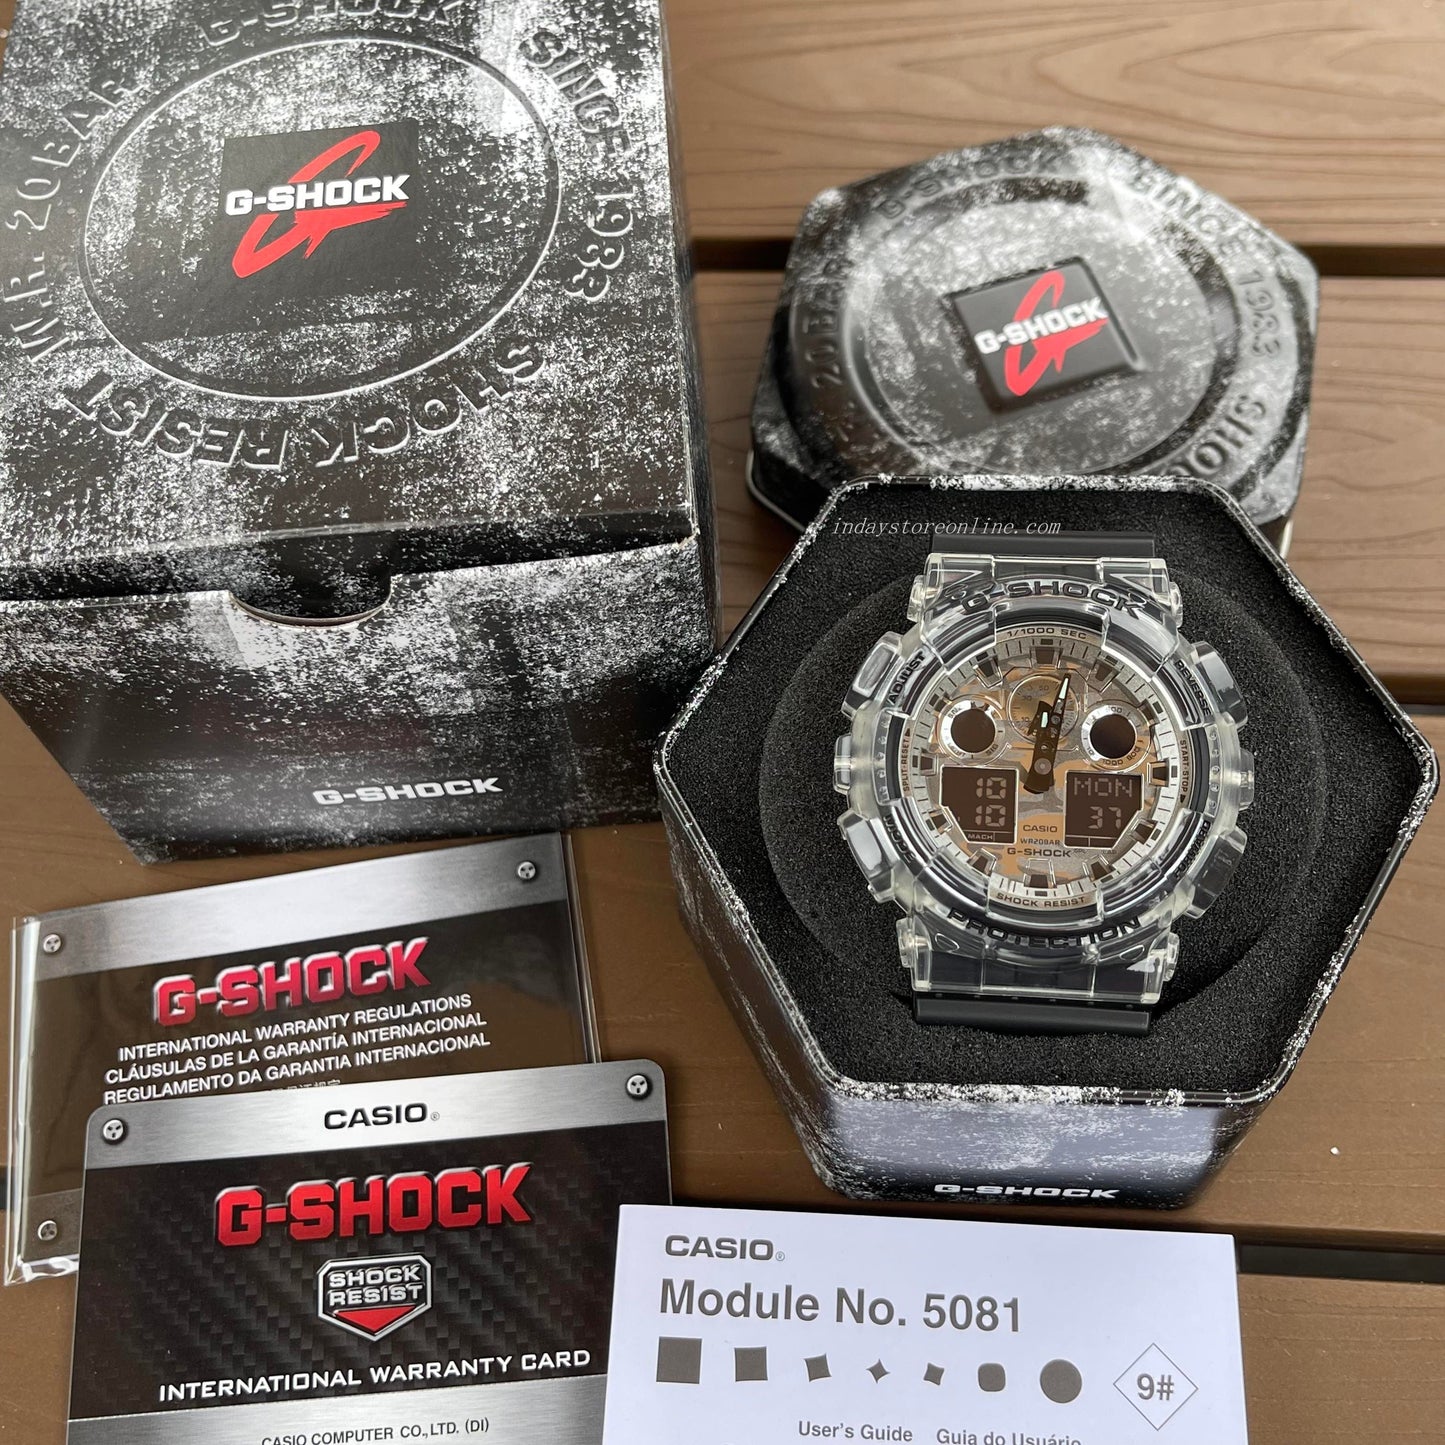 Casio G-Shock Men's Watch GA-100SKC-1A Analo-Digital GA-100 Series Camouflage Dial and Translucent Bezel  Chic Monochromatic Black